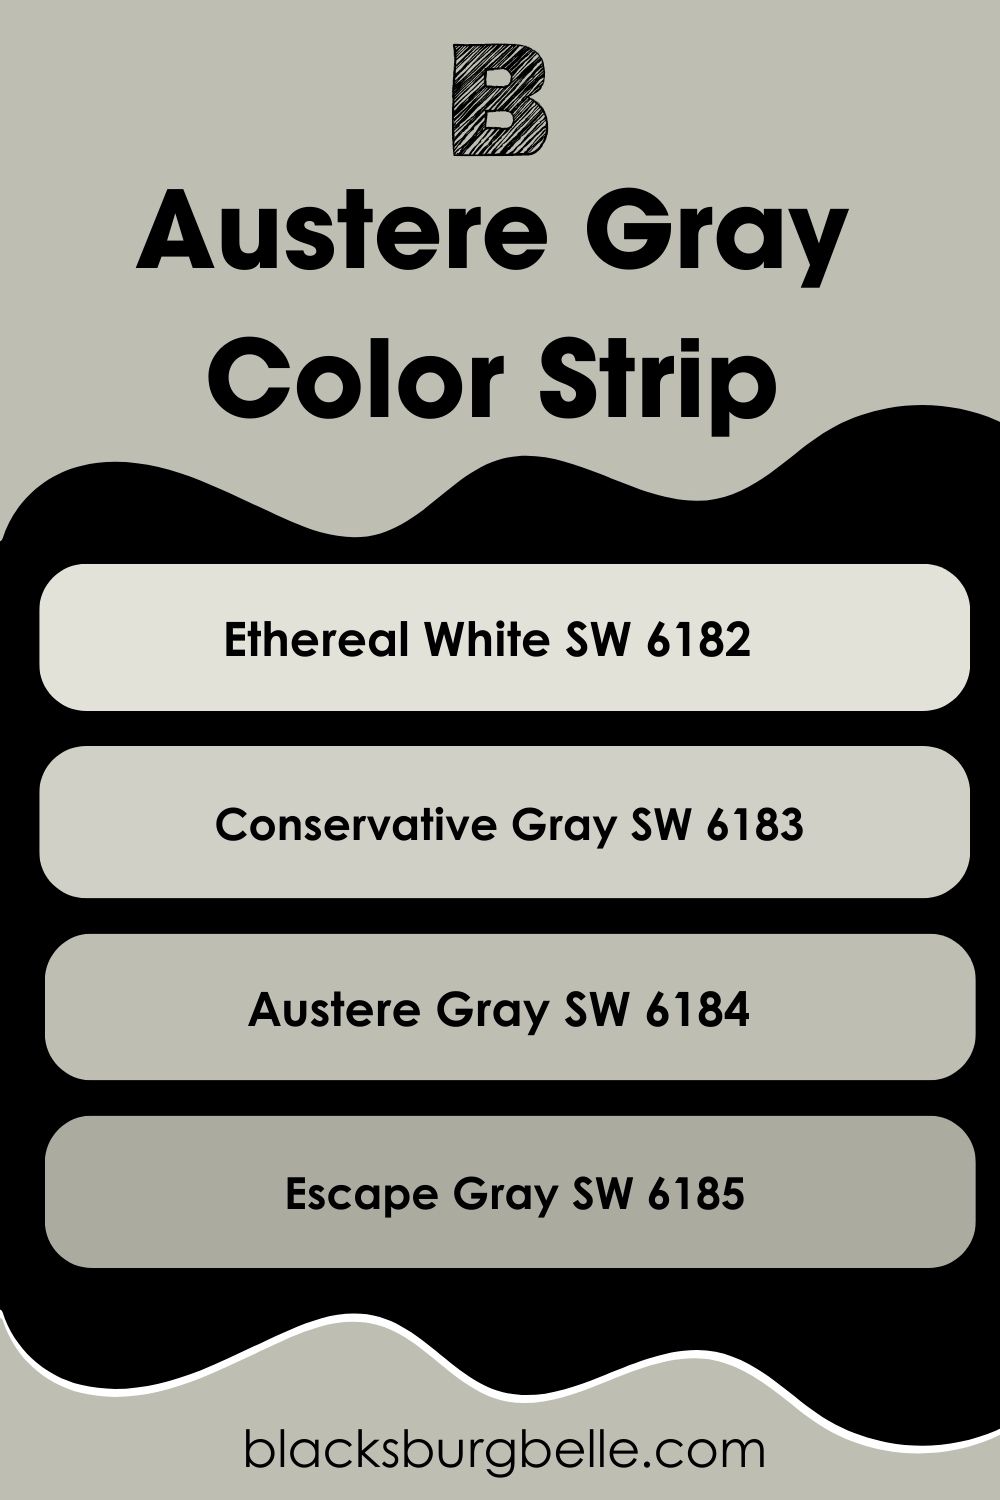 Austere Gray Color Strip